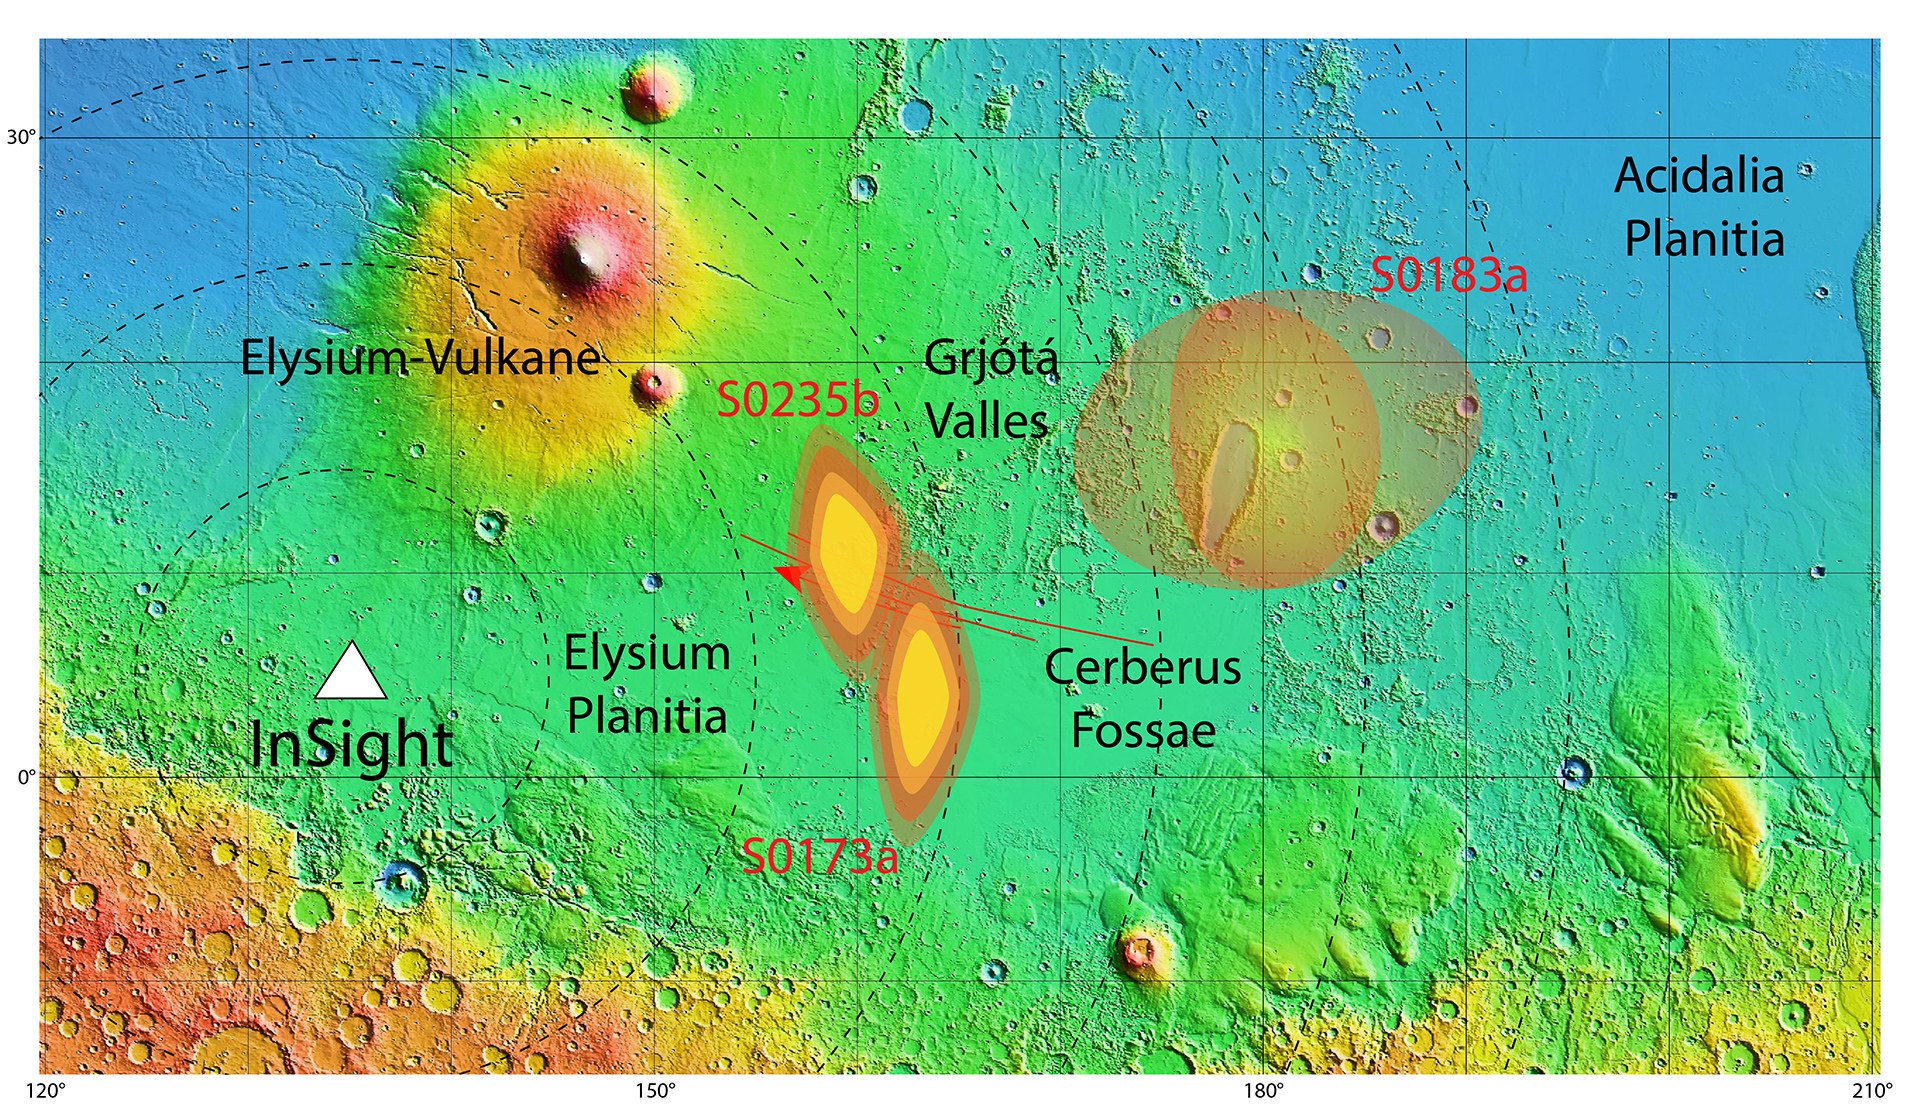 InSight lokalisiert Marsbeben in der Region Cerberus Fossae